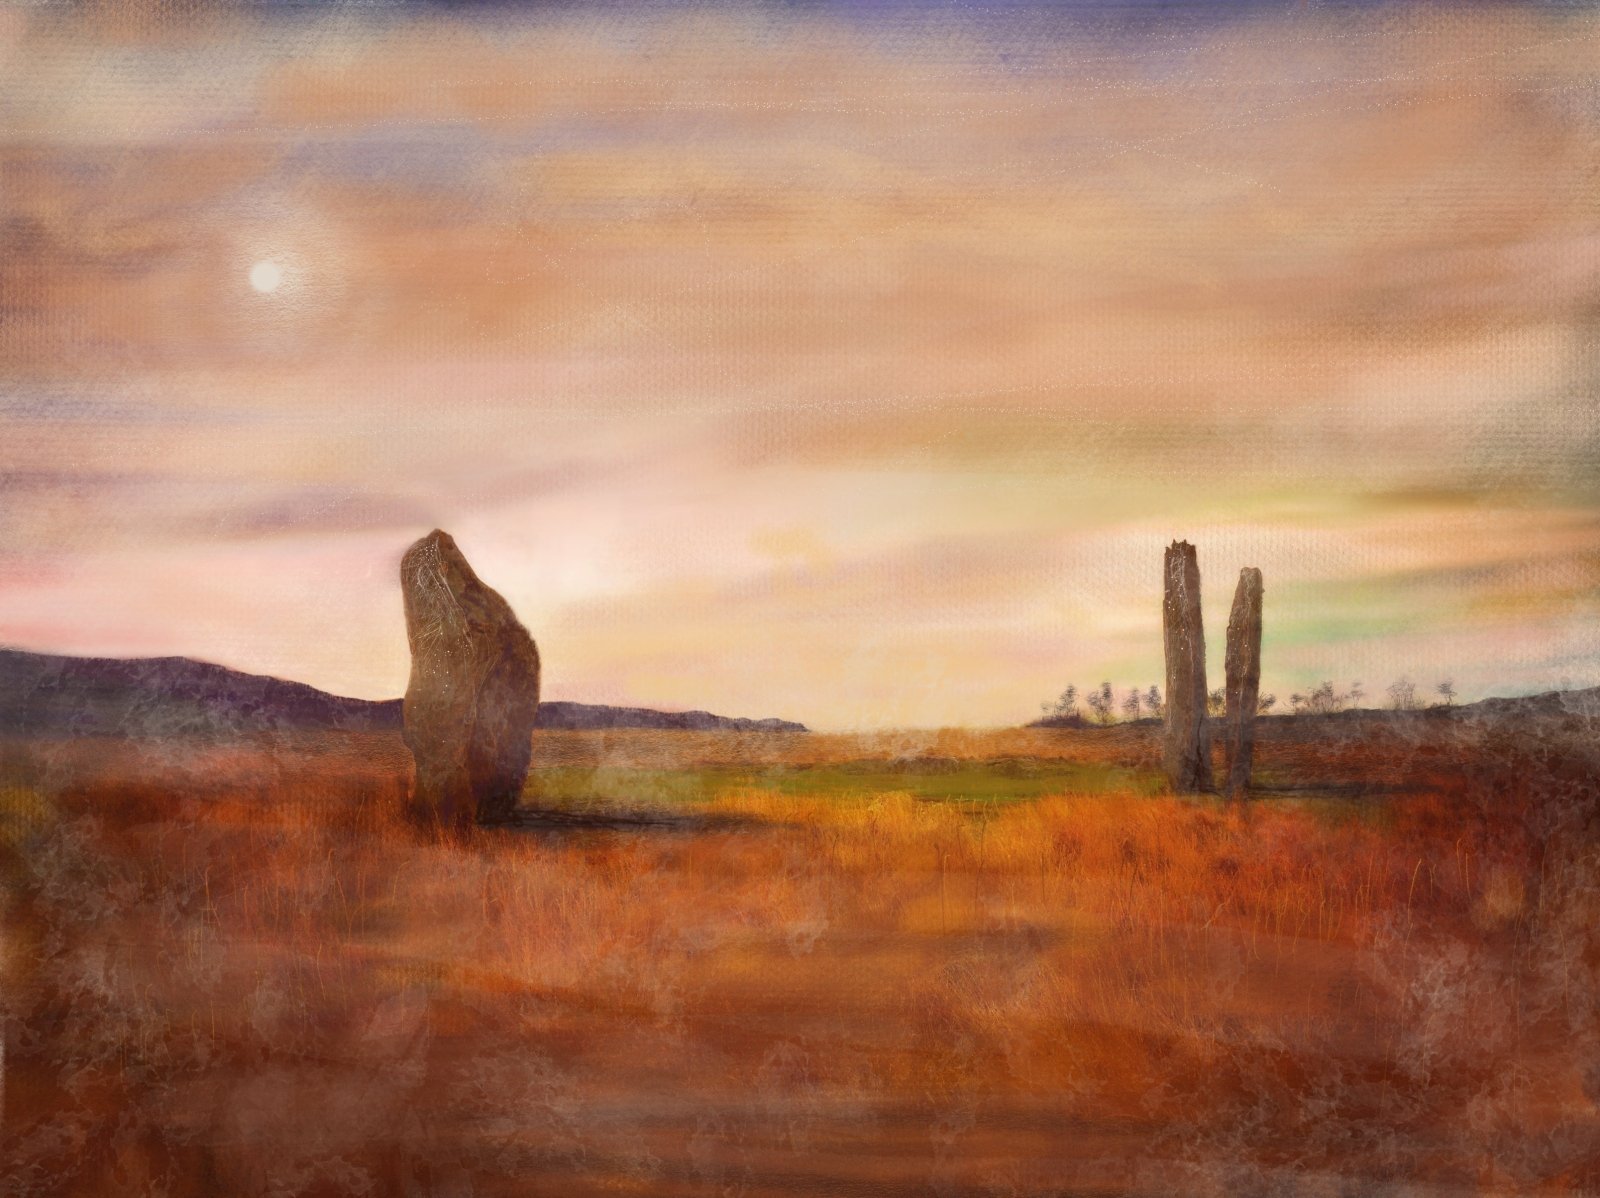 Machrie Moor Moonlight Arran-Signed Art Prints By Scottish Artist Hunter-Arran Art Gallery-Paintings, Prints, Homeware, Art Gifts From Scotland By Scottish Artist Kevin Hunter